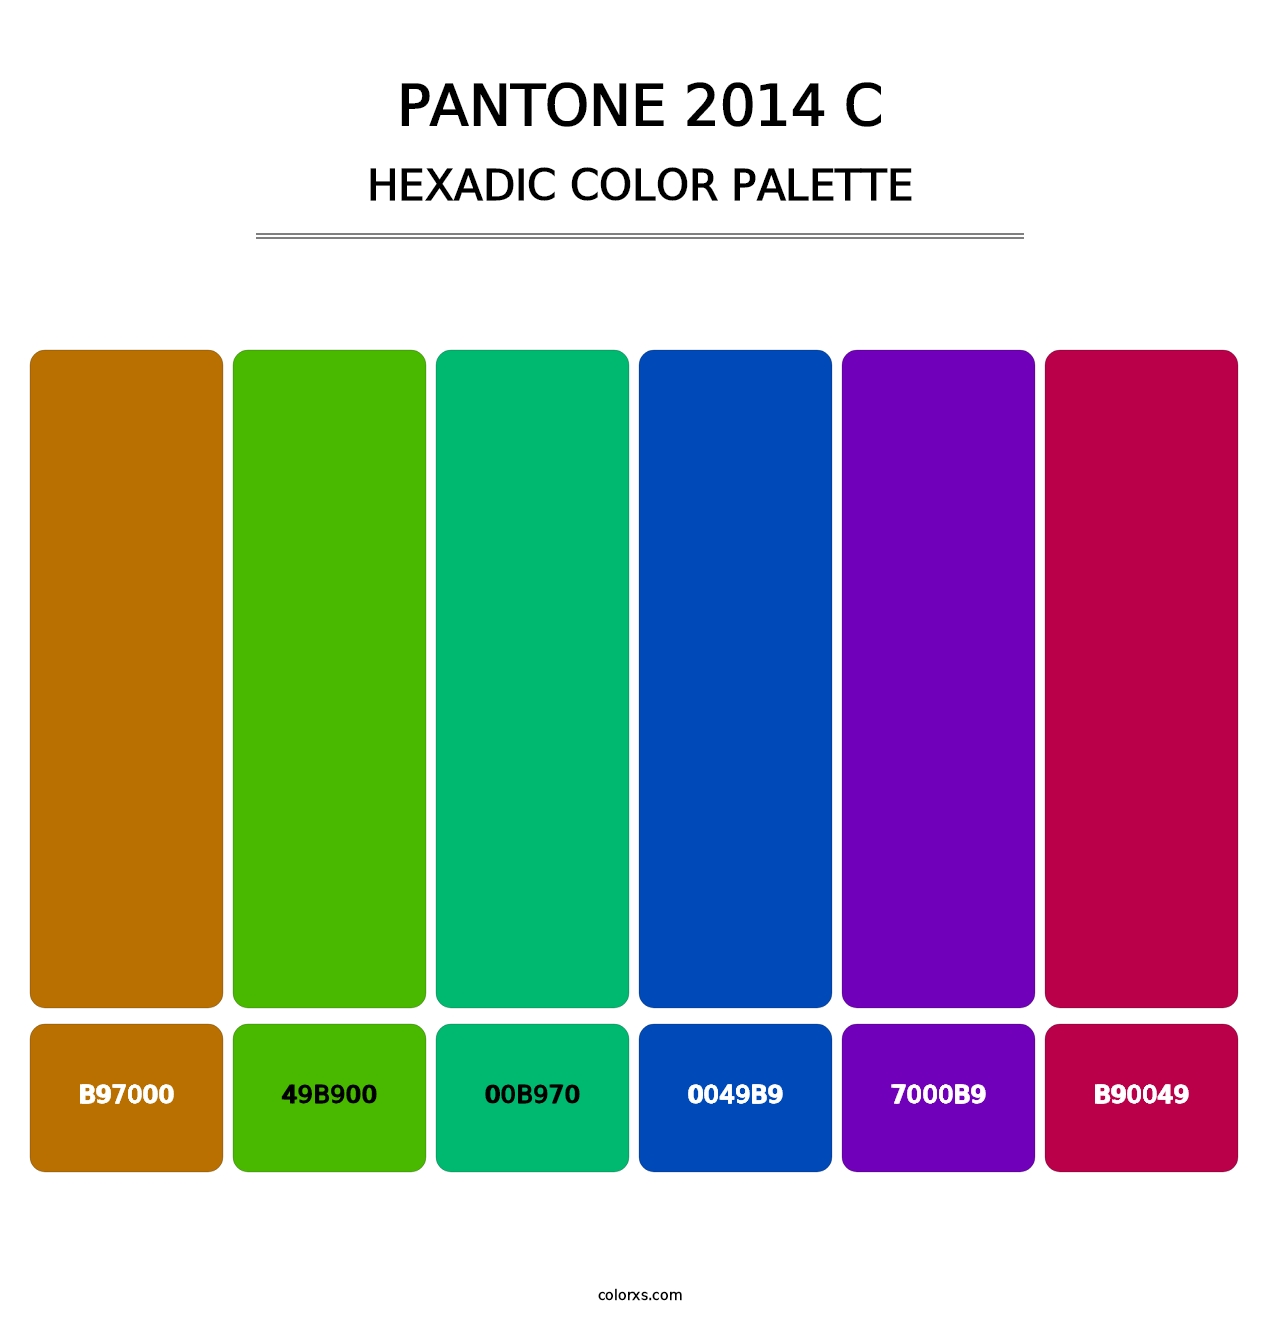 PANTONE 2014 C - Hexadic Color Palette